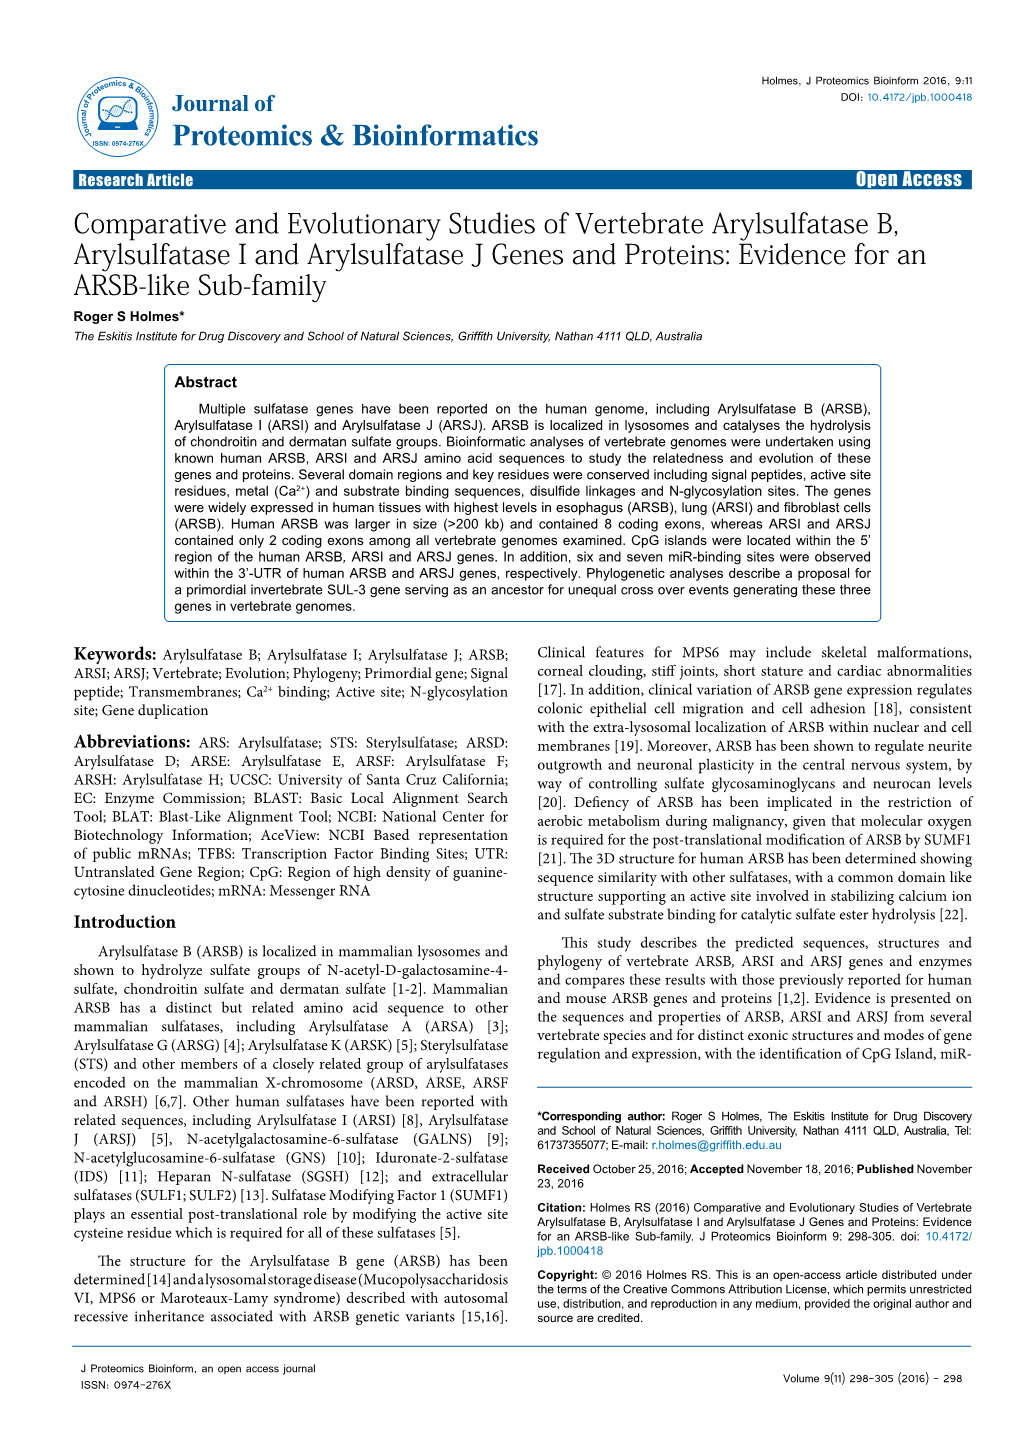 Comparative and Evolutionary Studies of Vertebrate Arylsulfatase B